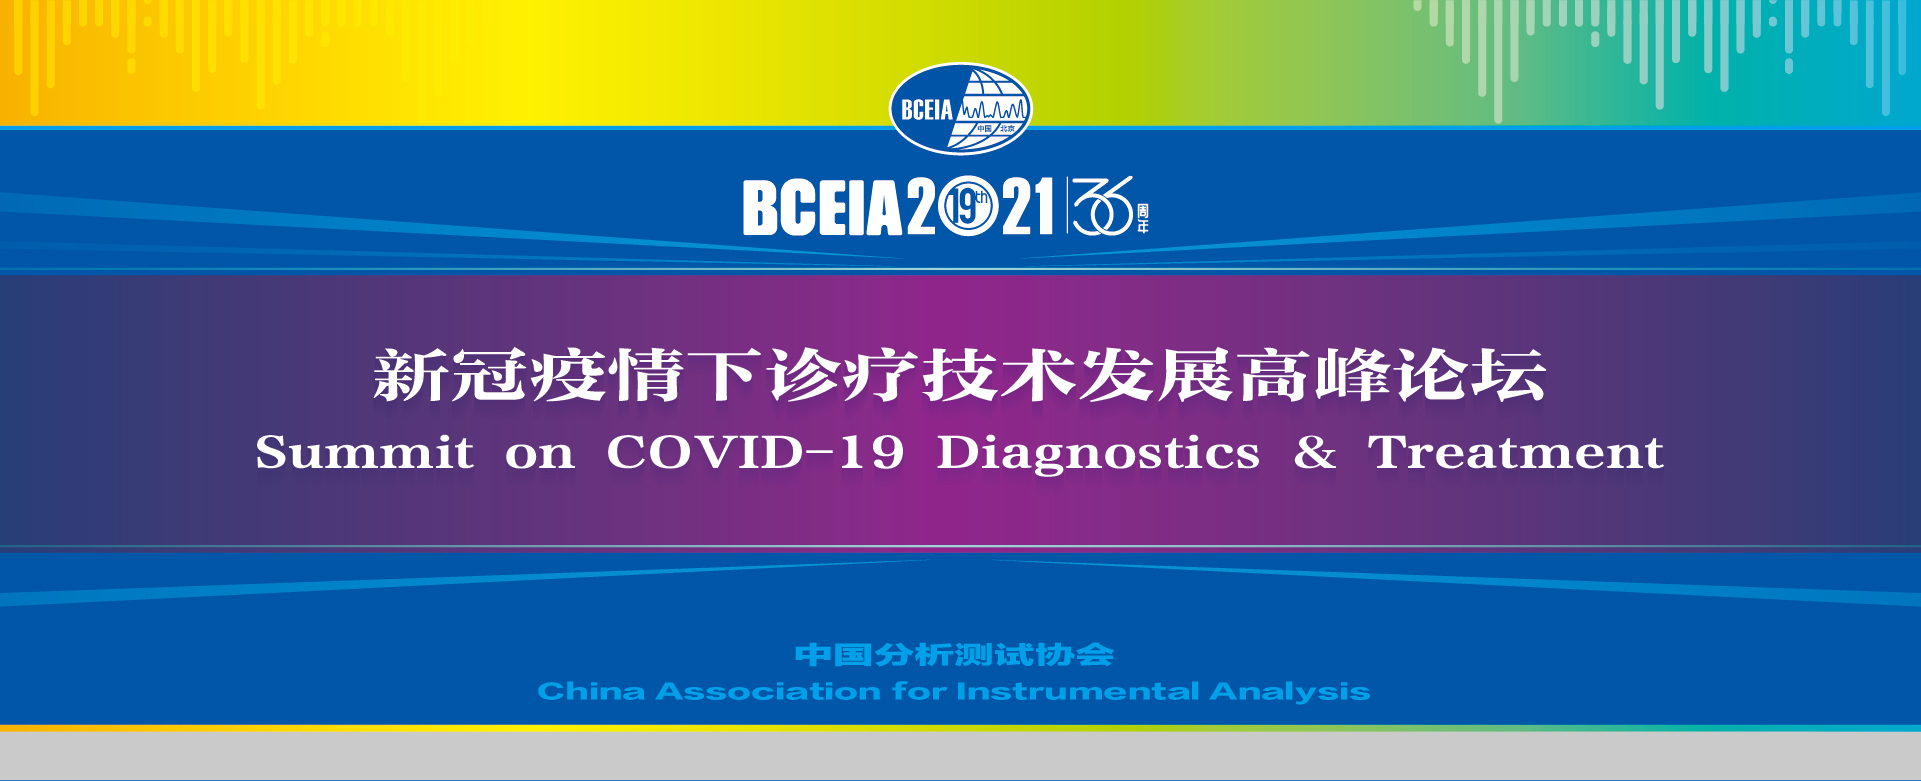 "Summit in COVID-19 Diagnostics & Treatment"